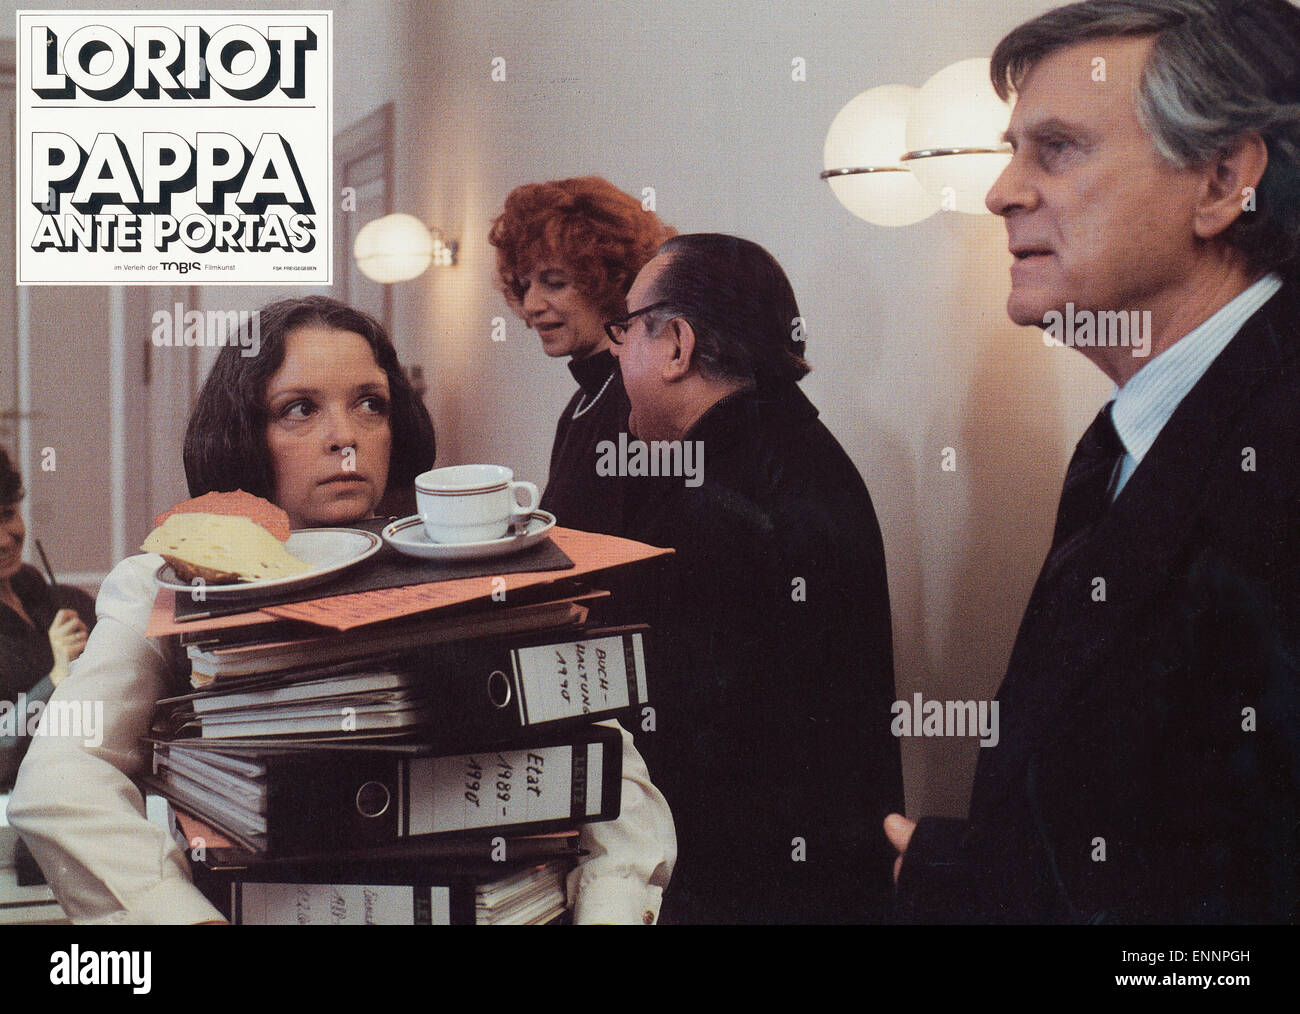 La pappa ante portas, aka: Loriots Pappa ante portas, Deutschland 1991, Regie: Vicco von Bülow, Darsteller: Vicco von Bülow (rechts Foto Stock